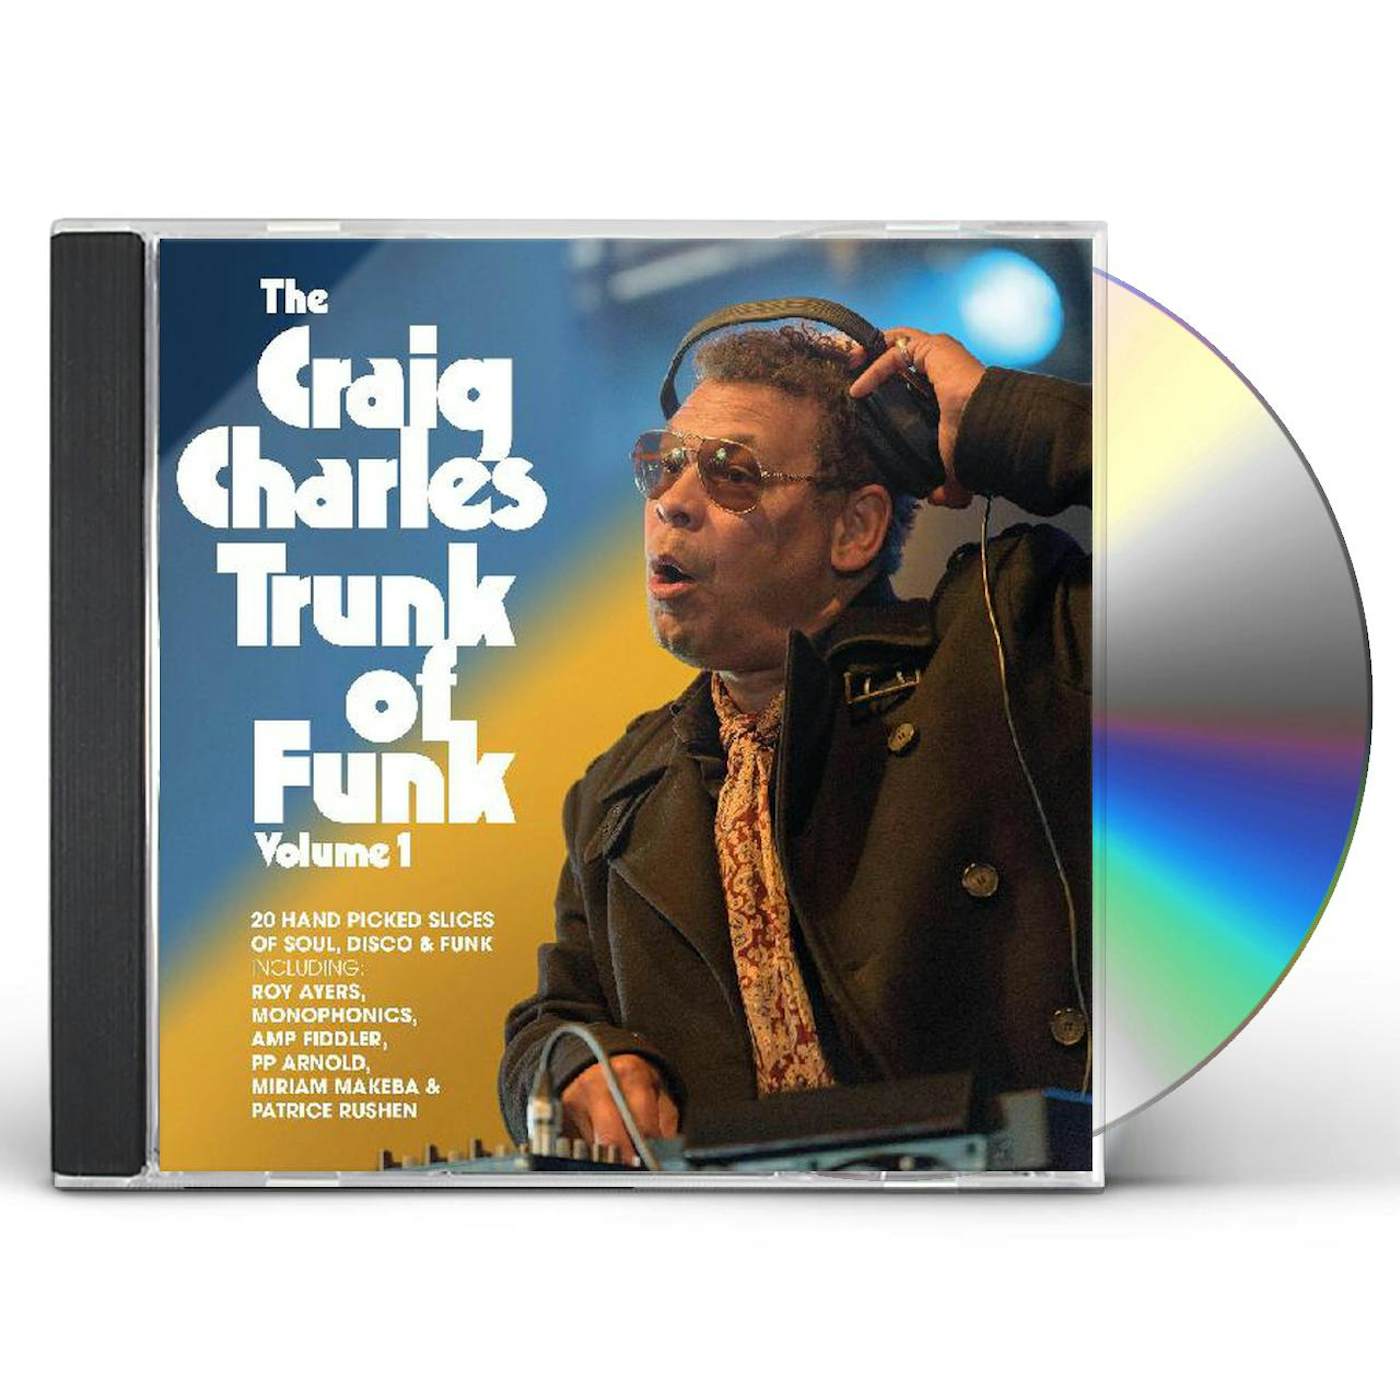 The Craig Charles Trunk of Funk Volume 1 CD